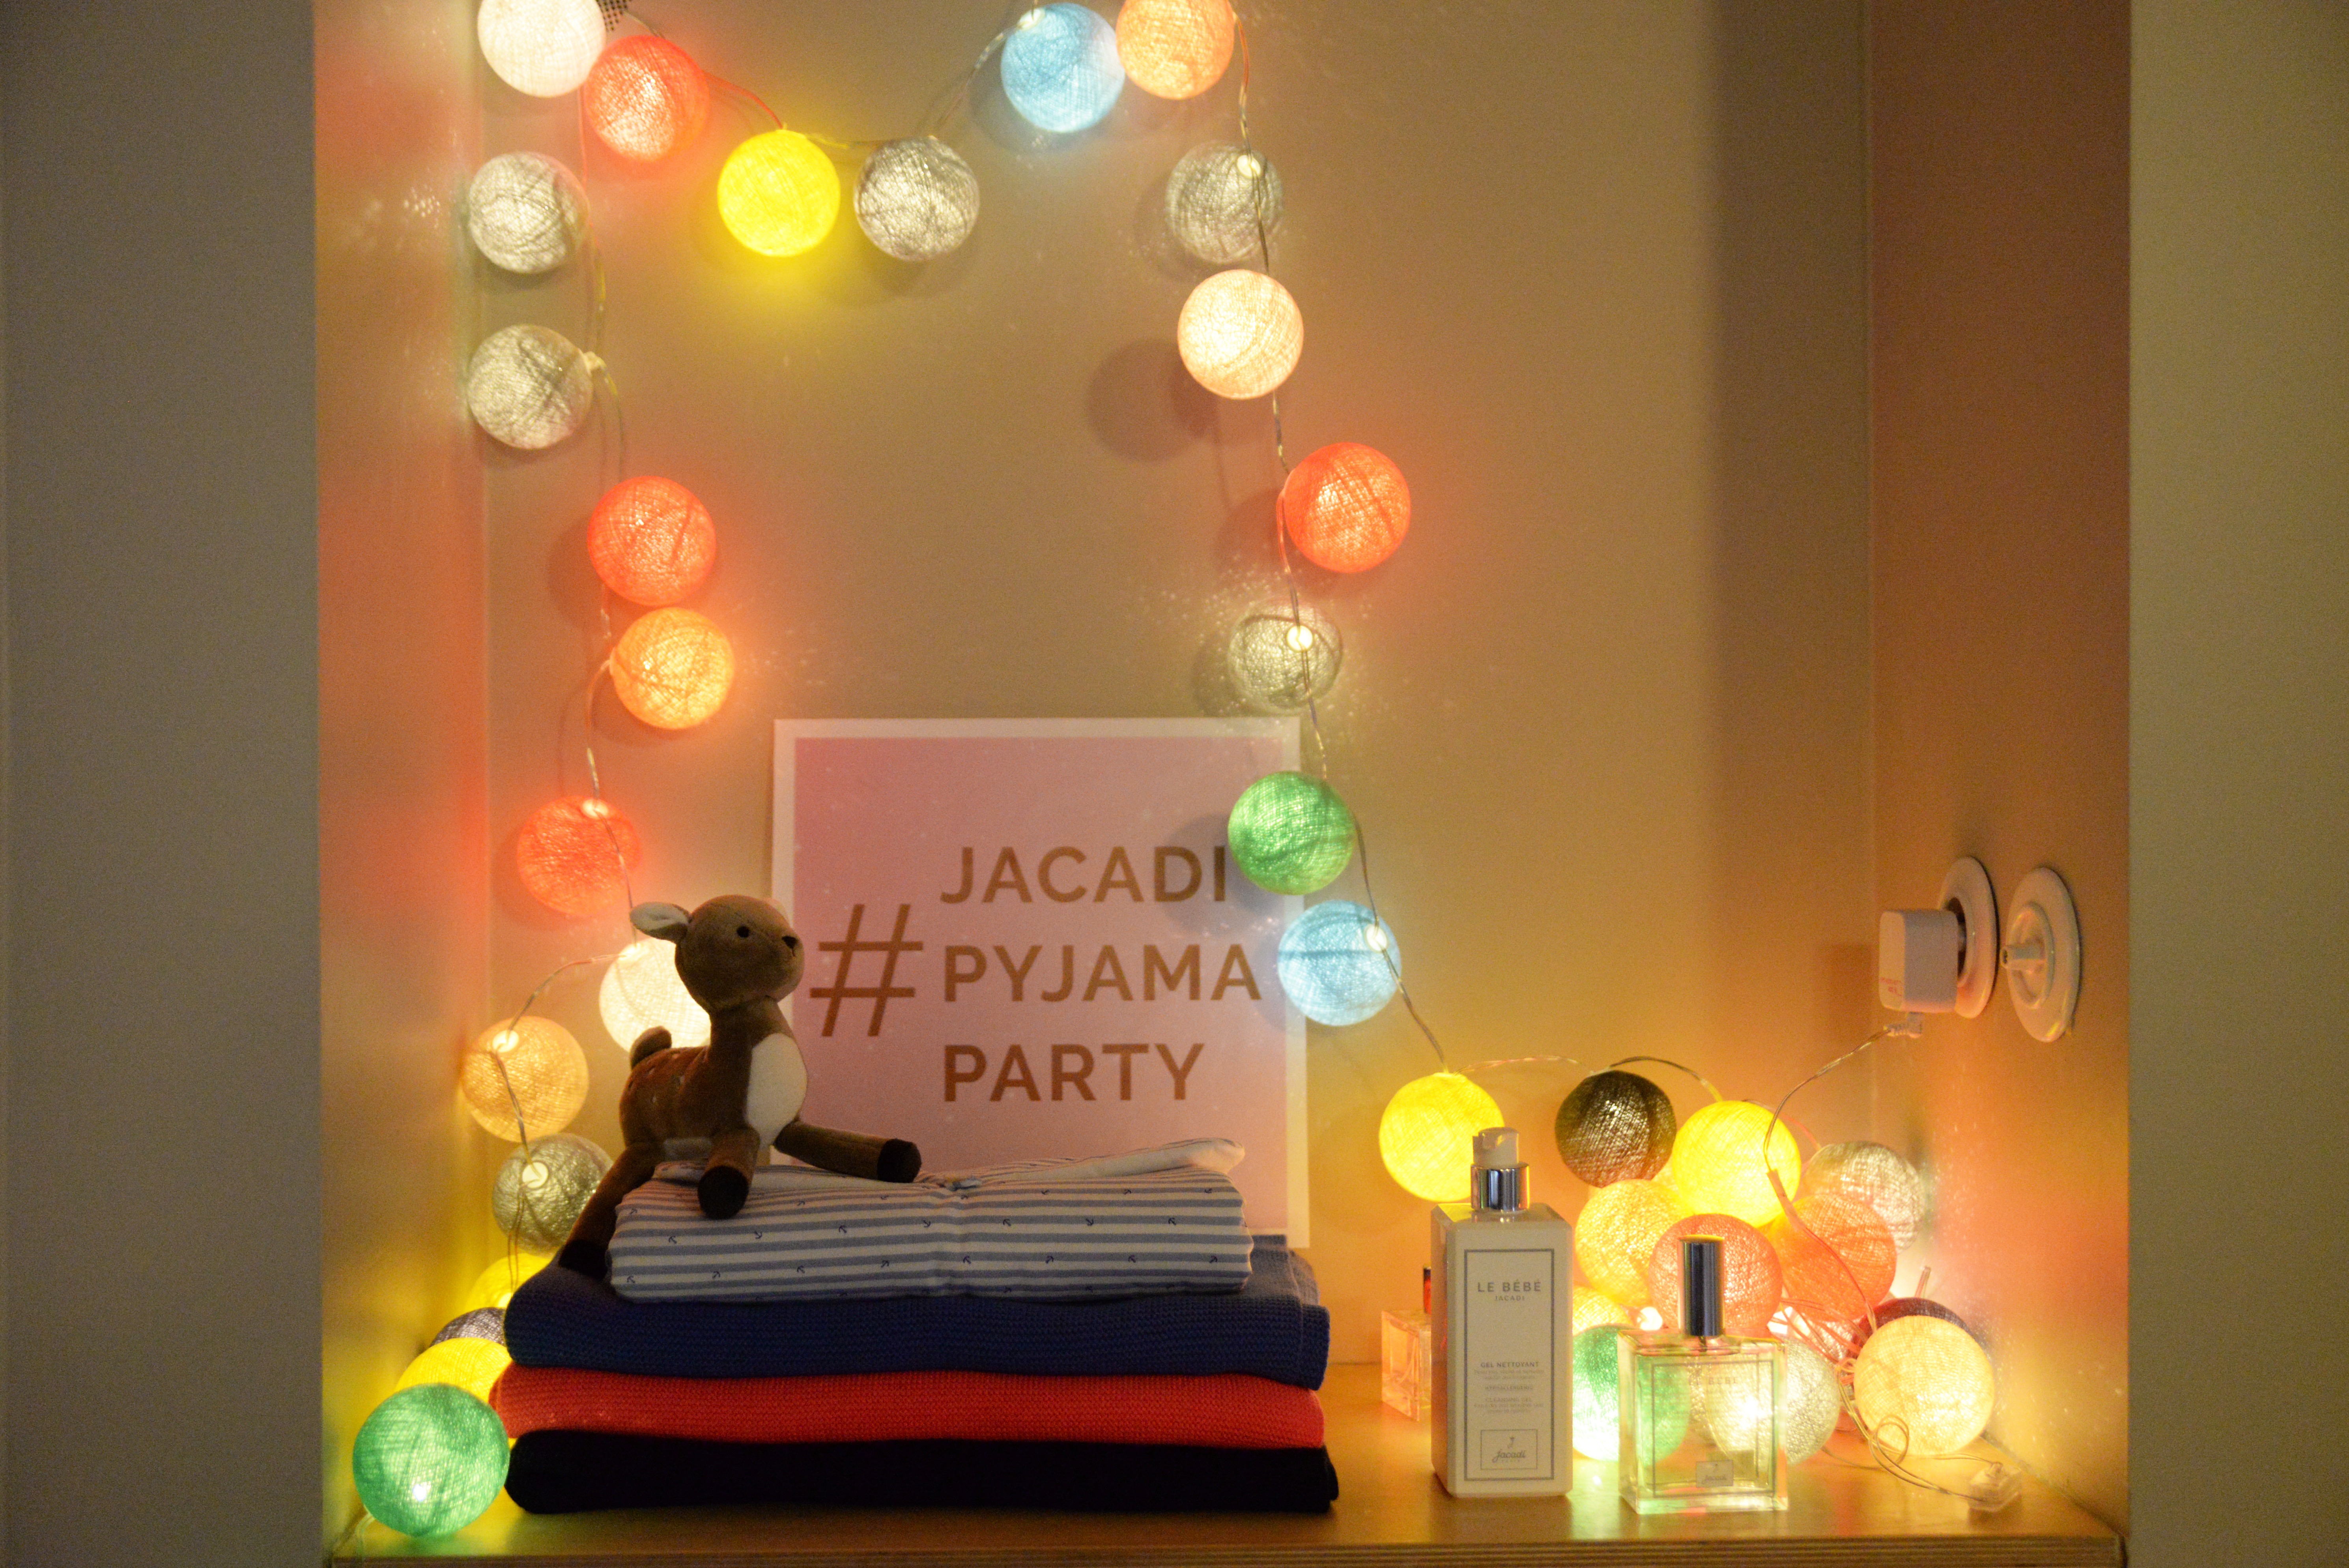 Pyjama party - Jacadi